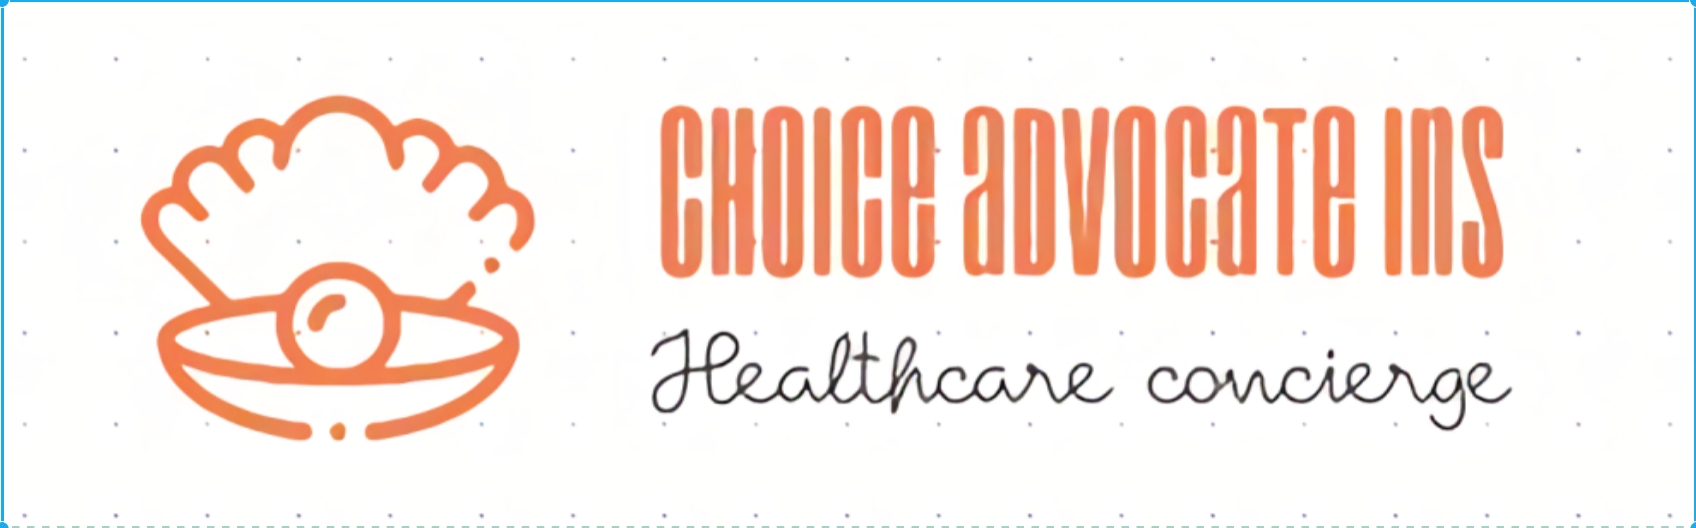 Choice Advocate Insurance